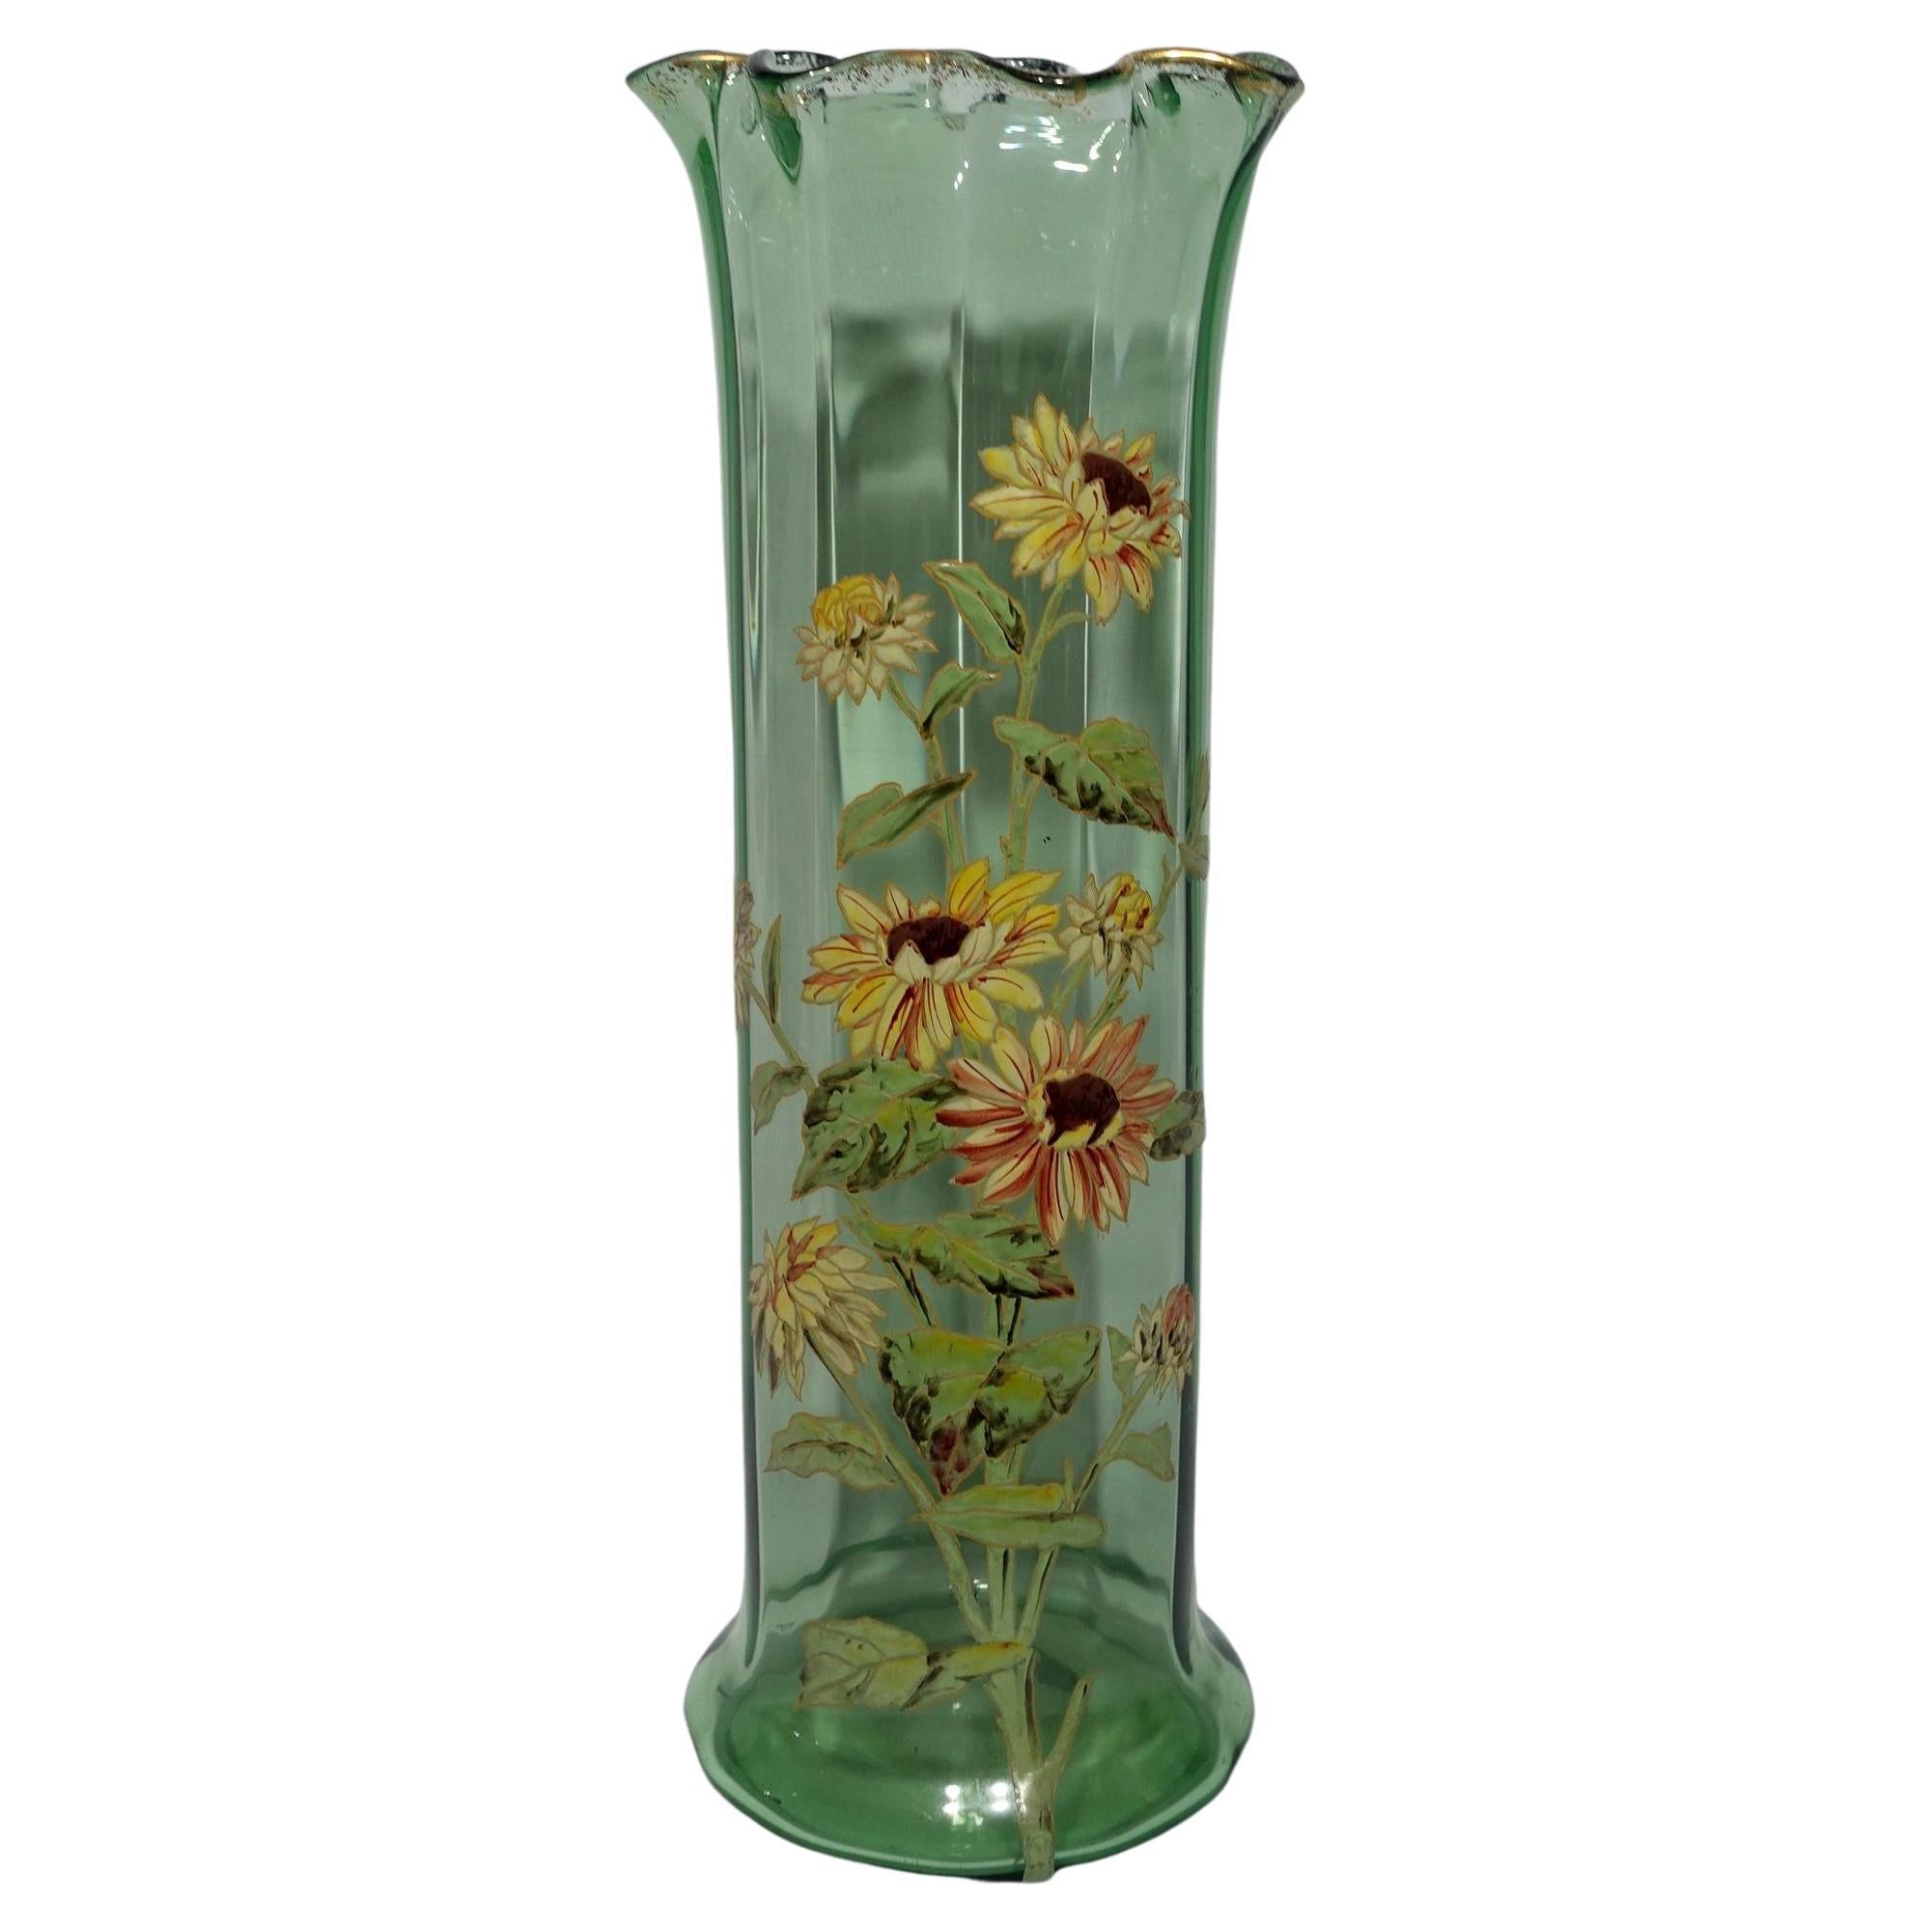 Grand vase d'art ancien en verre émaillé vert Mont Joye